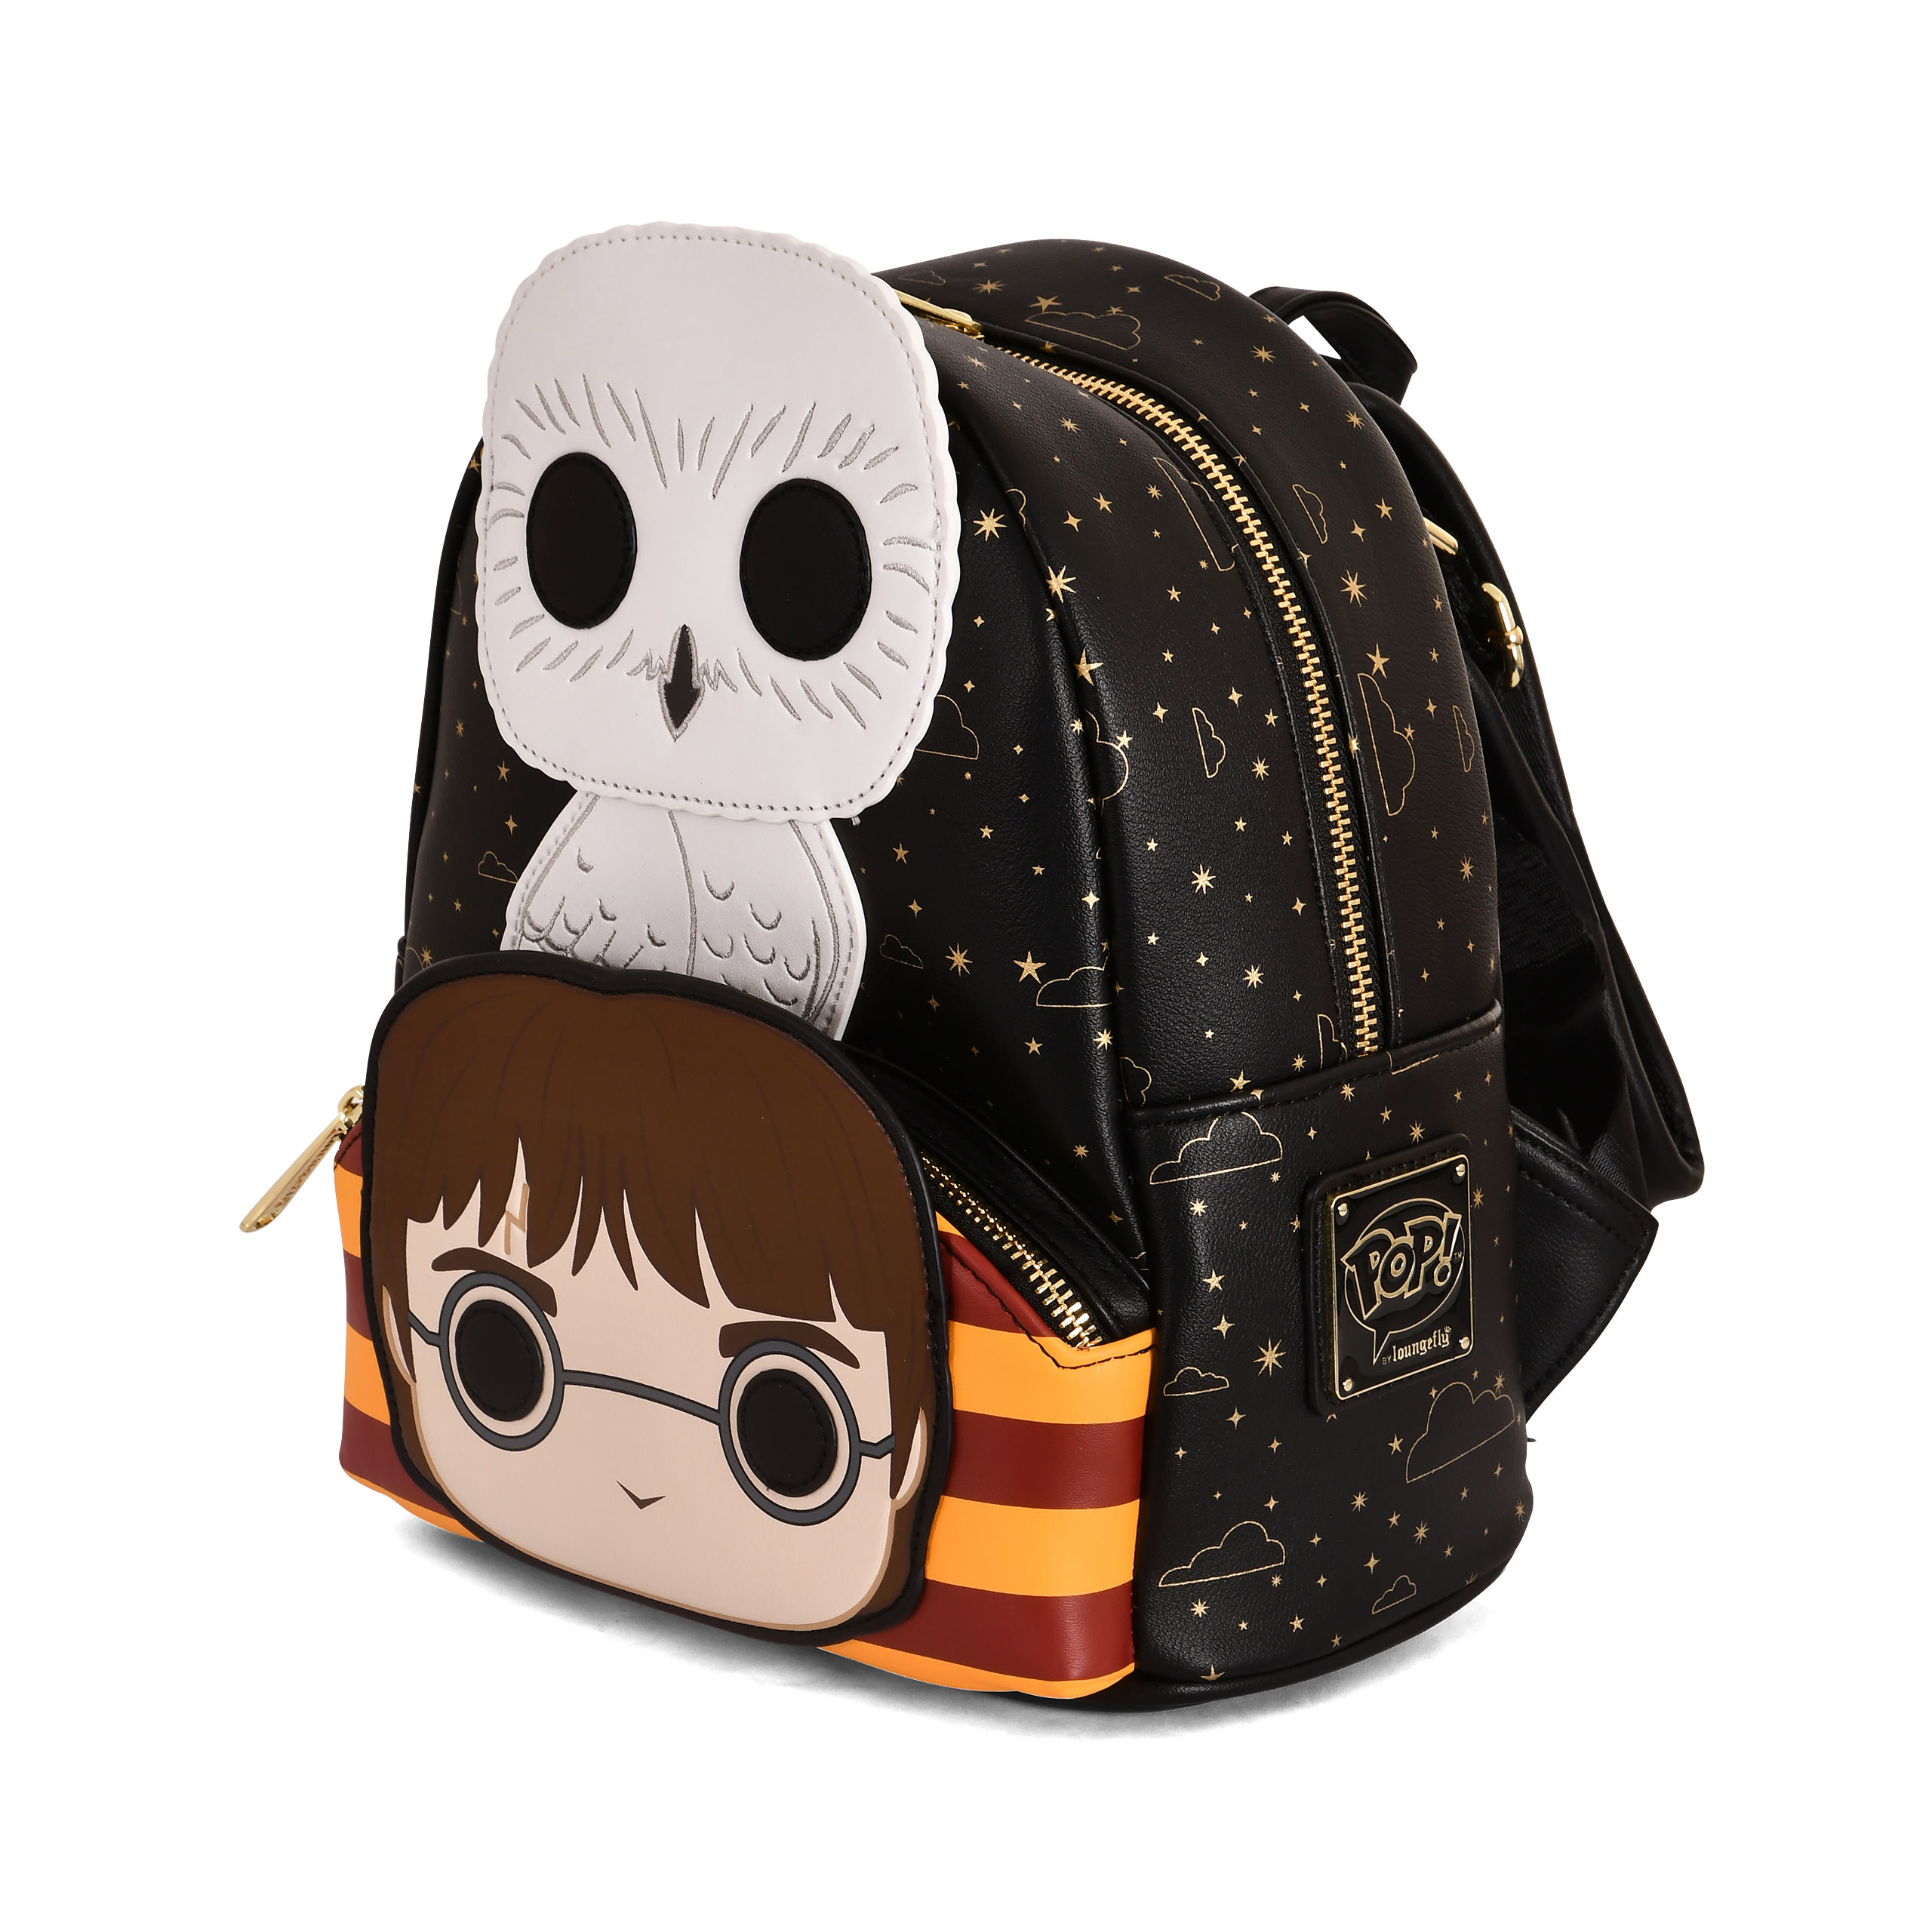 Harry Potter & Hedwig Chibi Mini Backpack